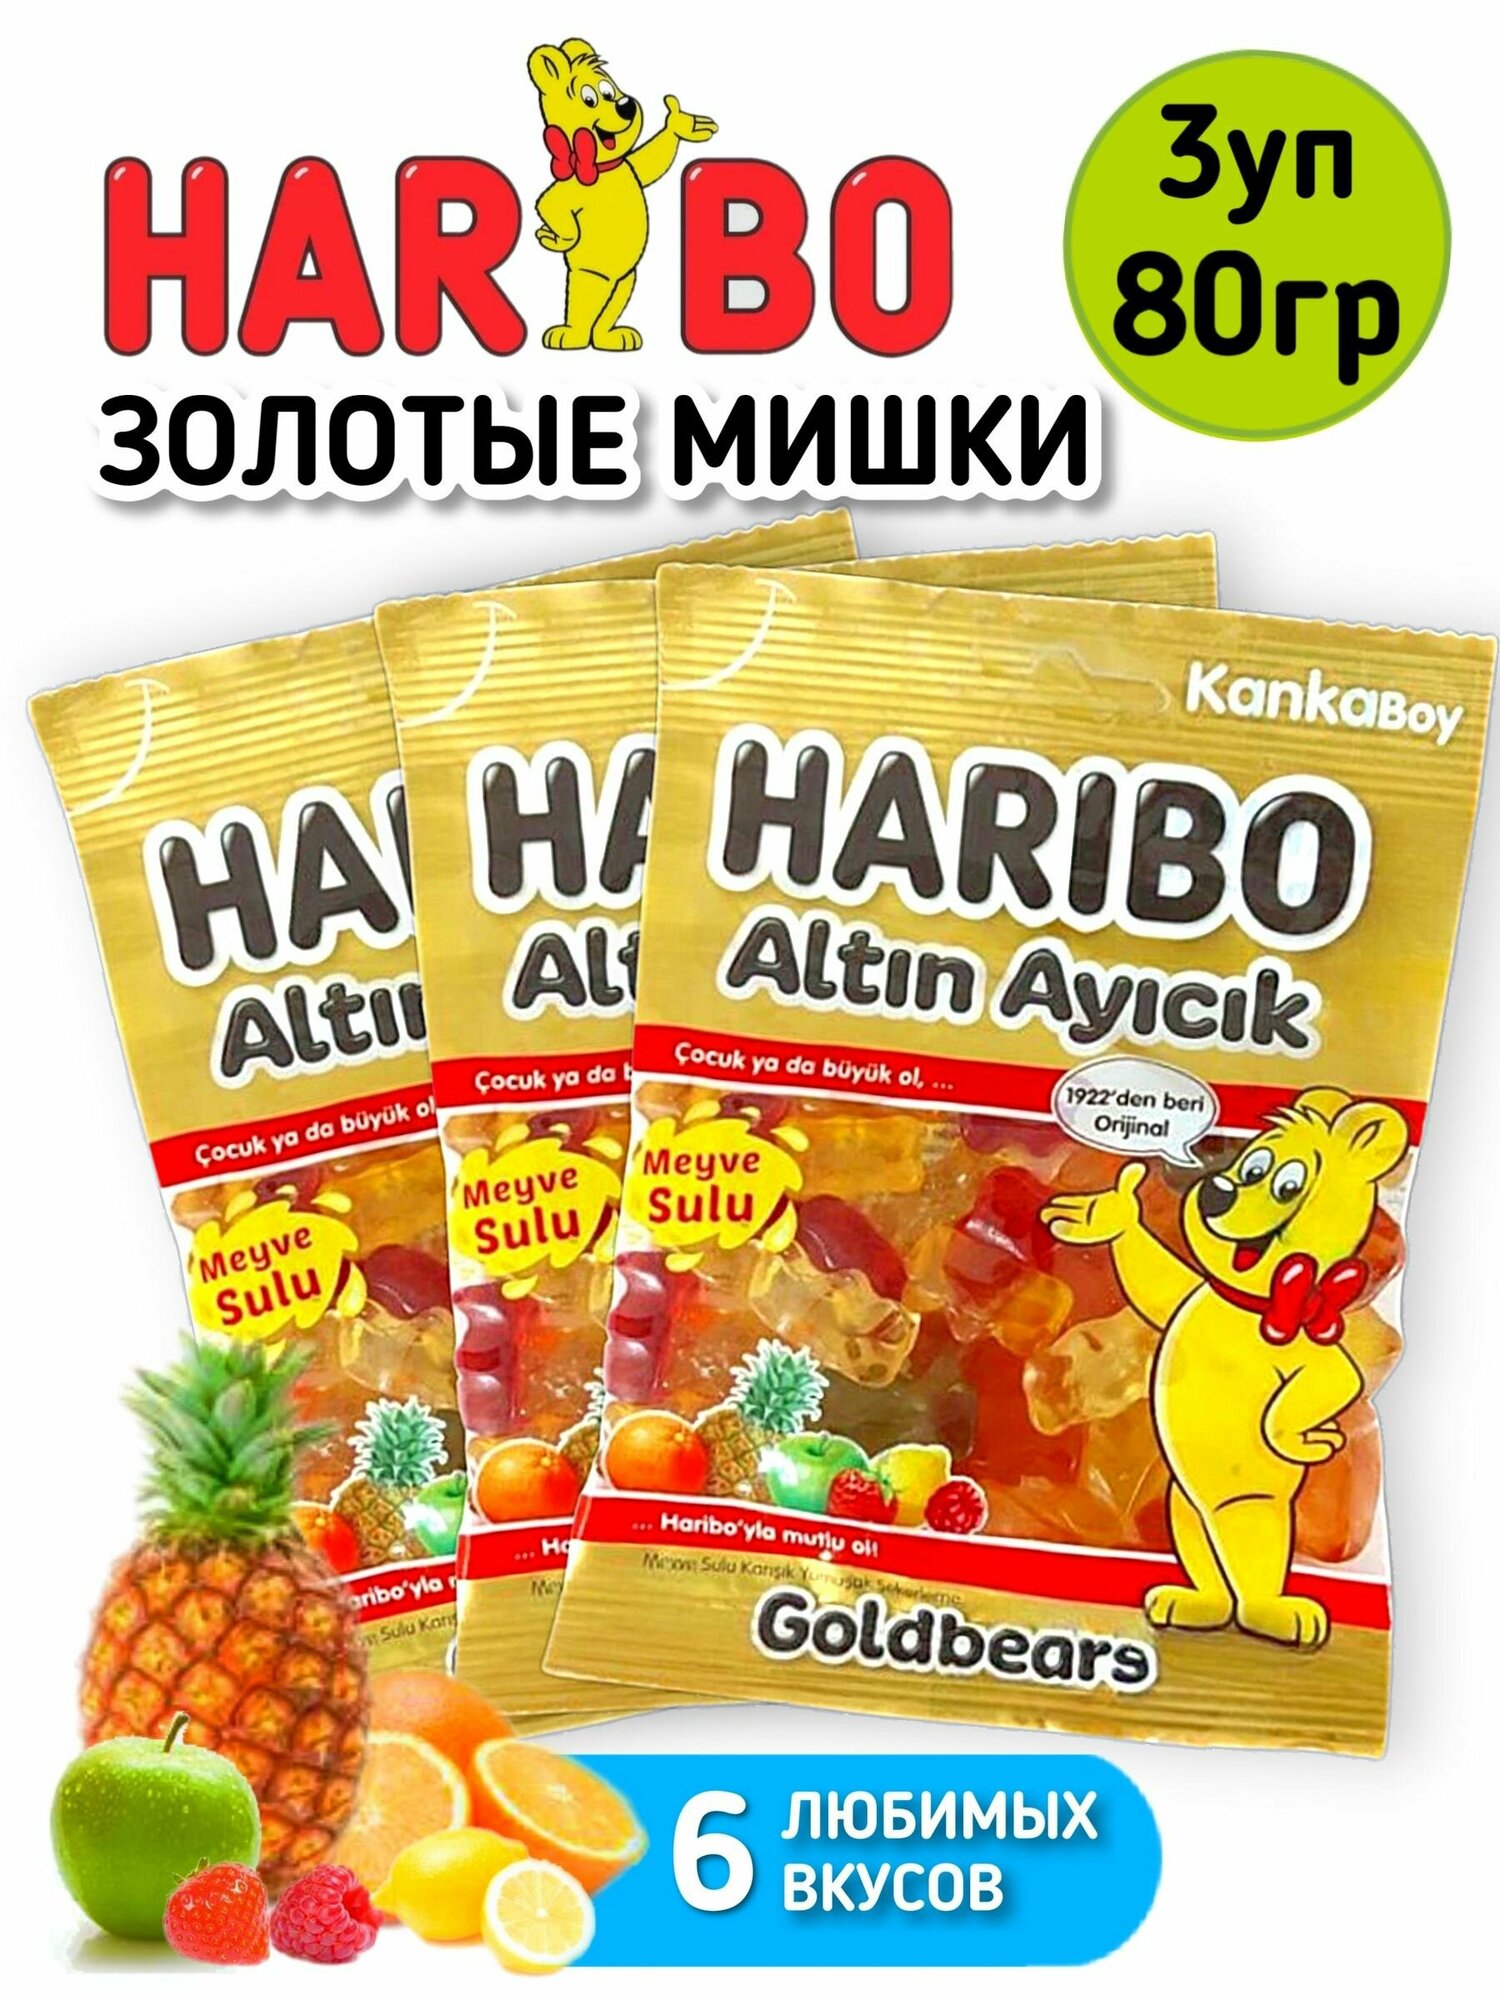 Haribo жевательный мармелад Золотые мишки 80 гр.- 3 штуки